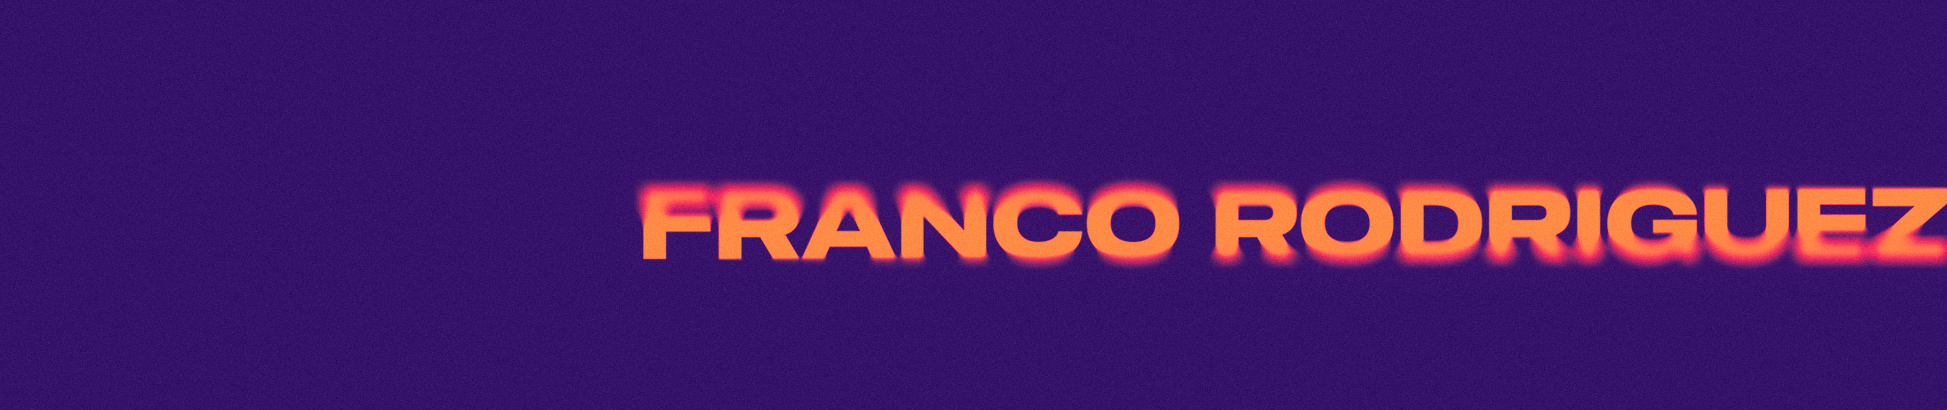 Franco Rodriguez's profile banner